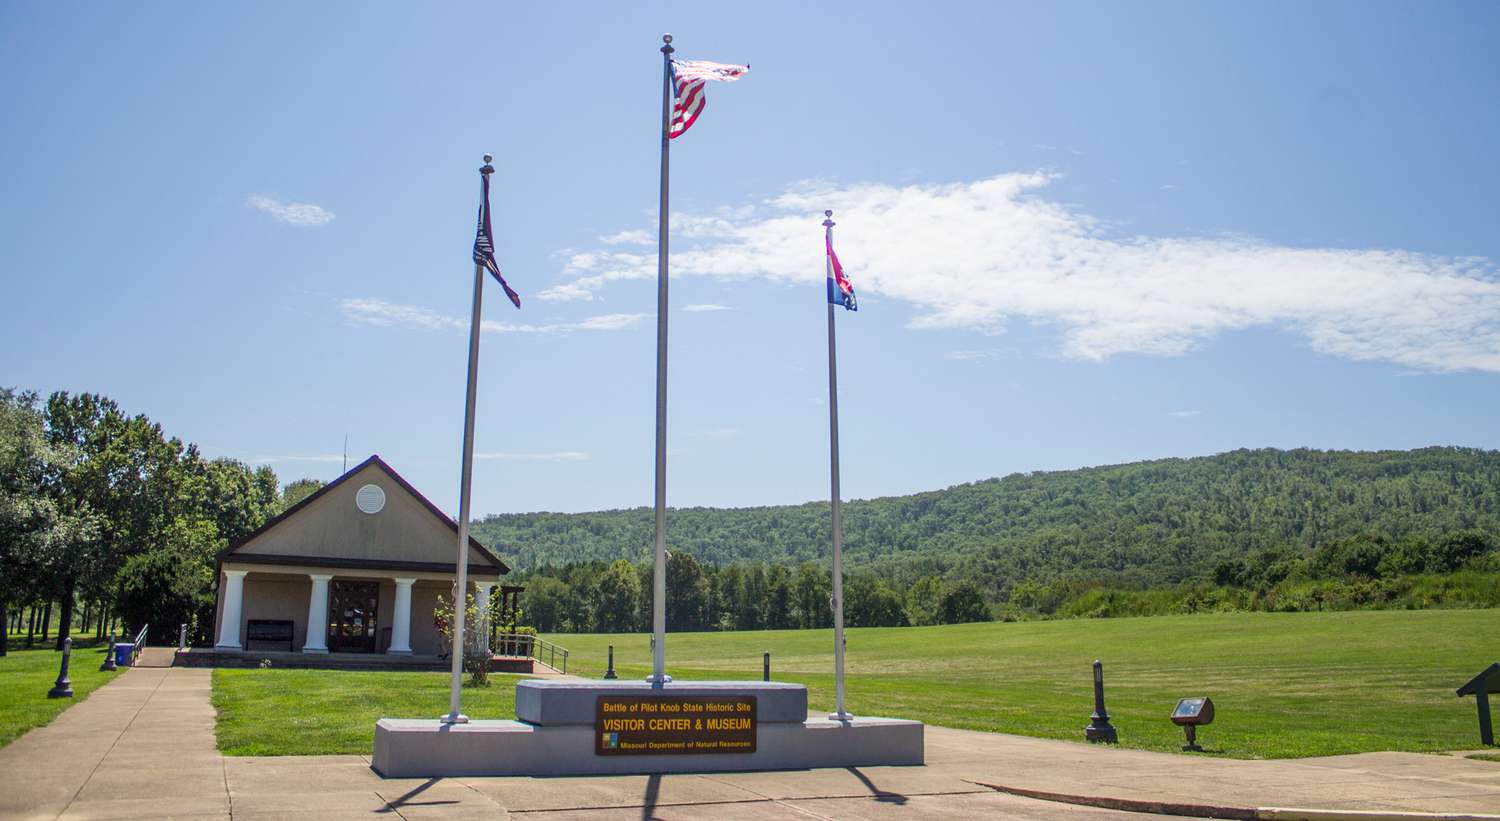 Battle of Pilot Knob State Historic Site